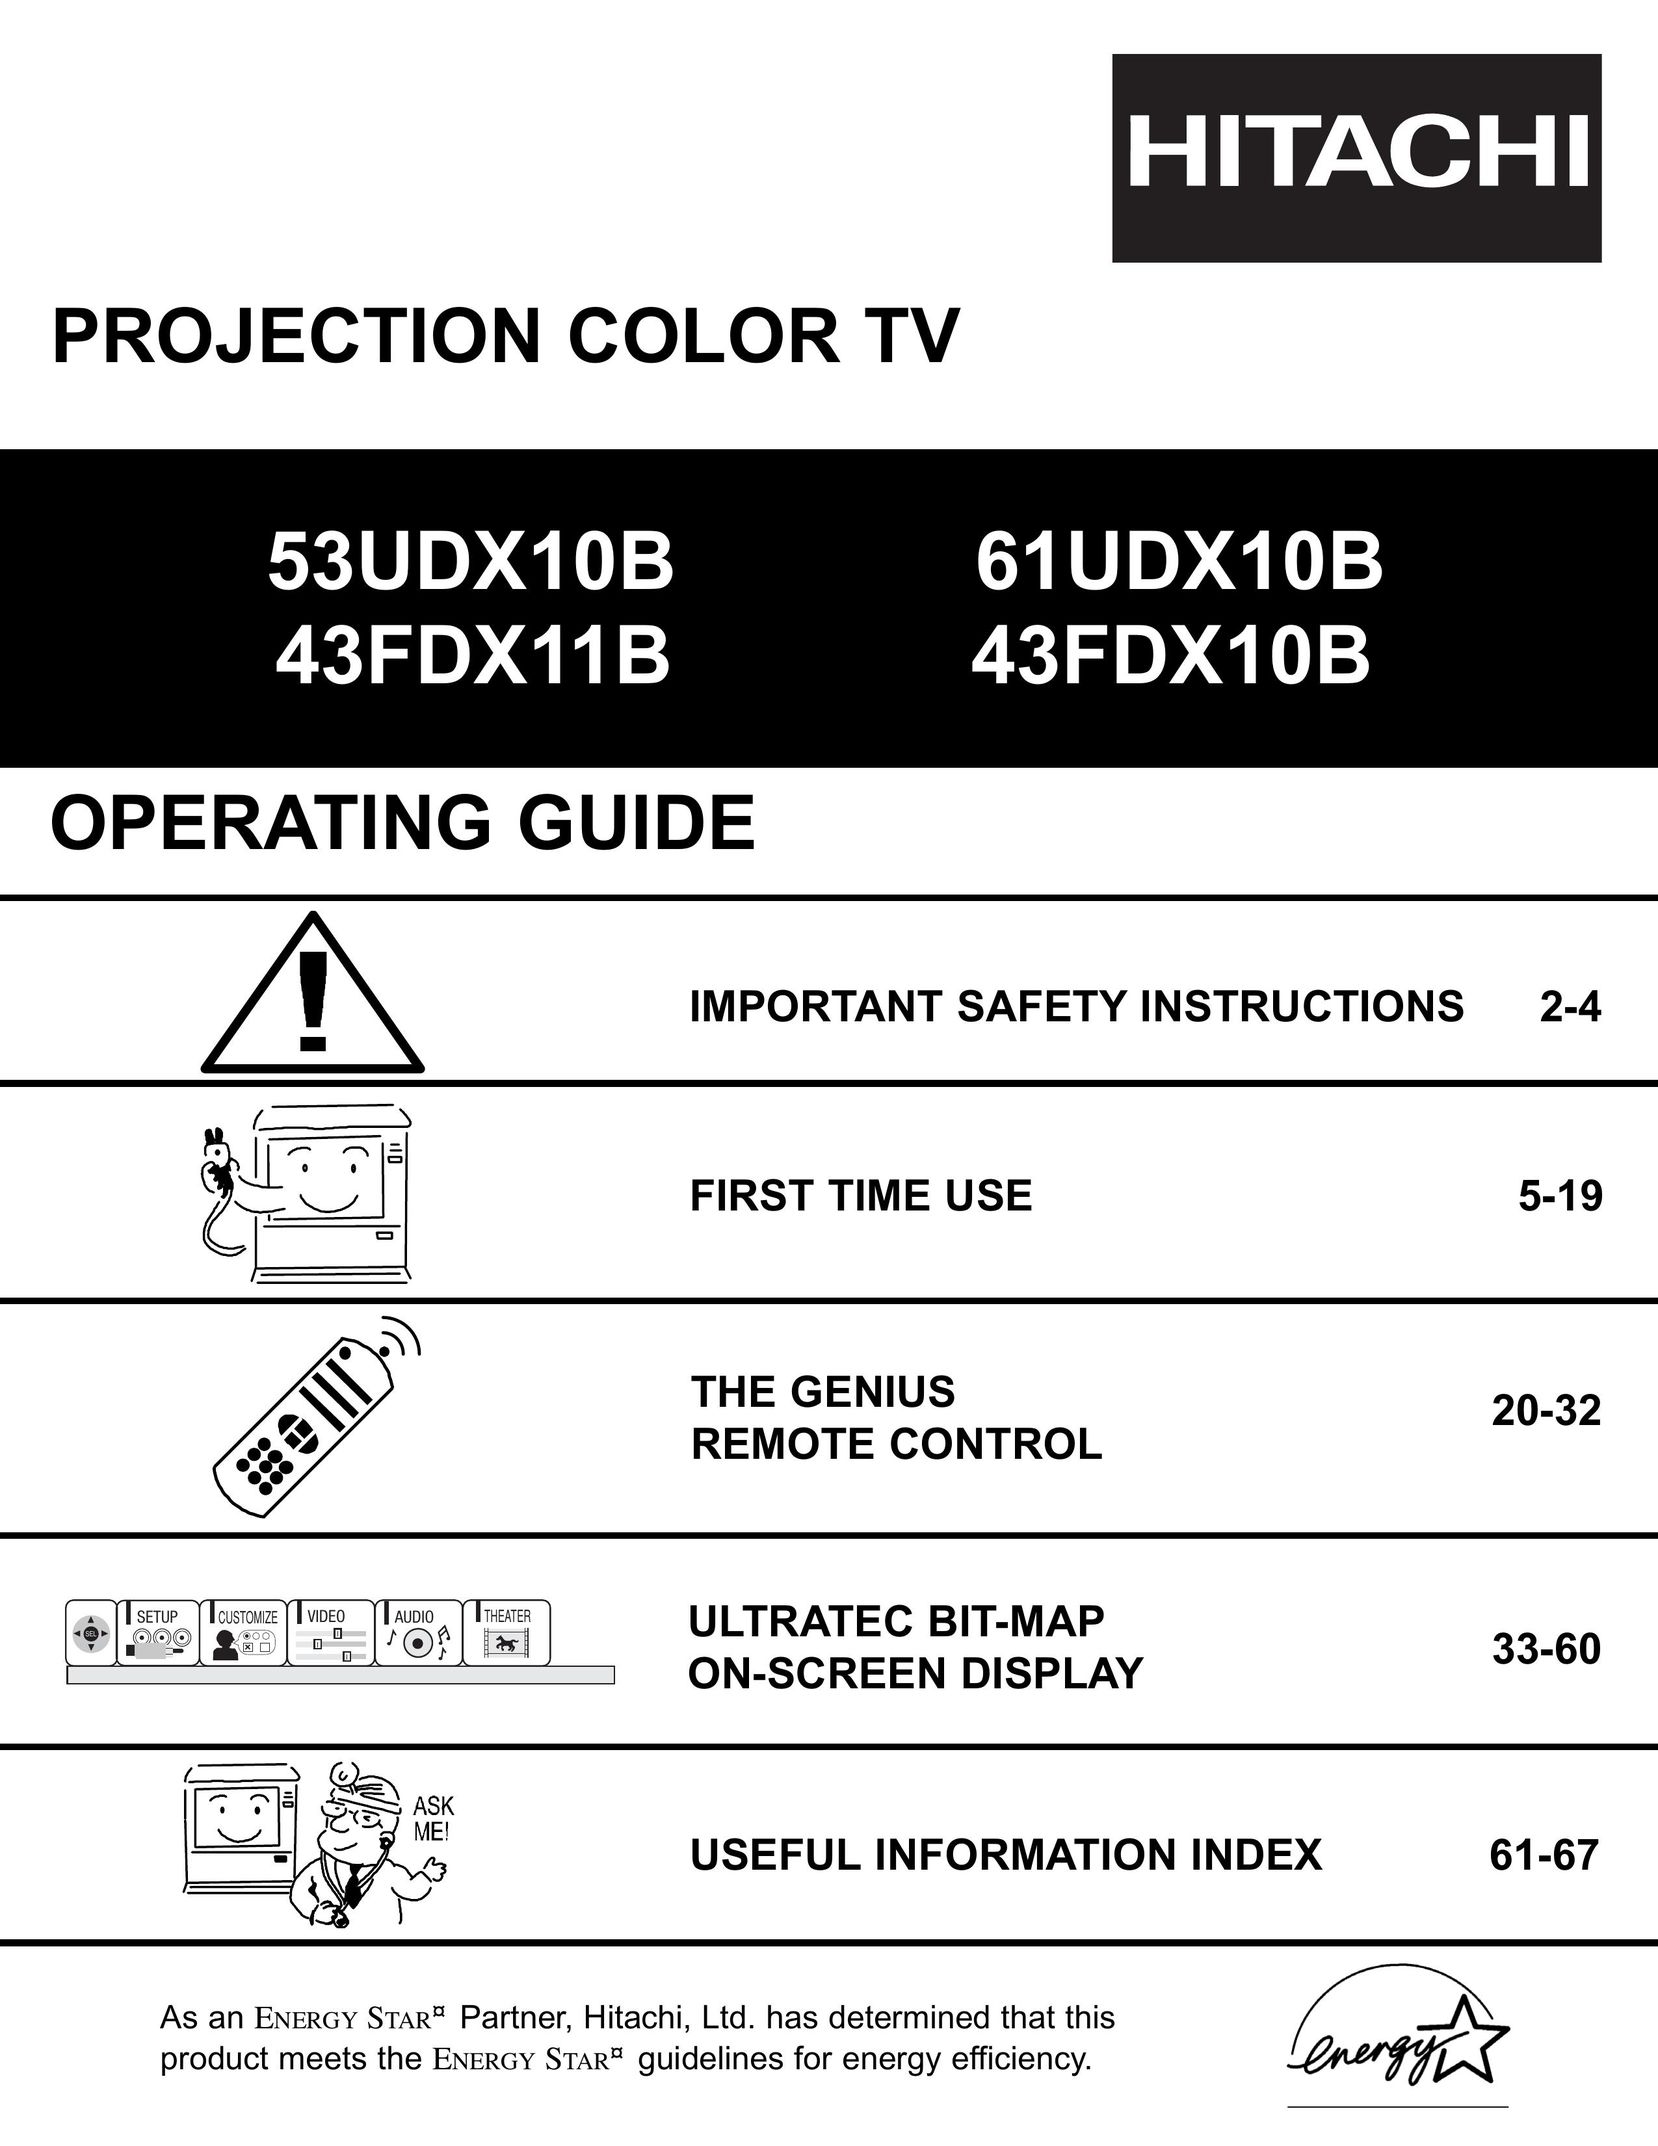 Hitachi 43FDX10B Projection Television User Manual